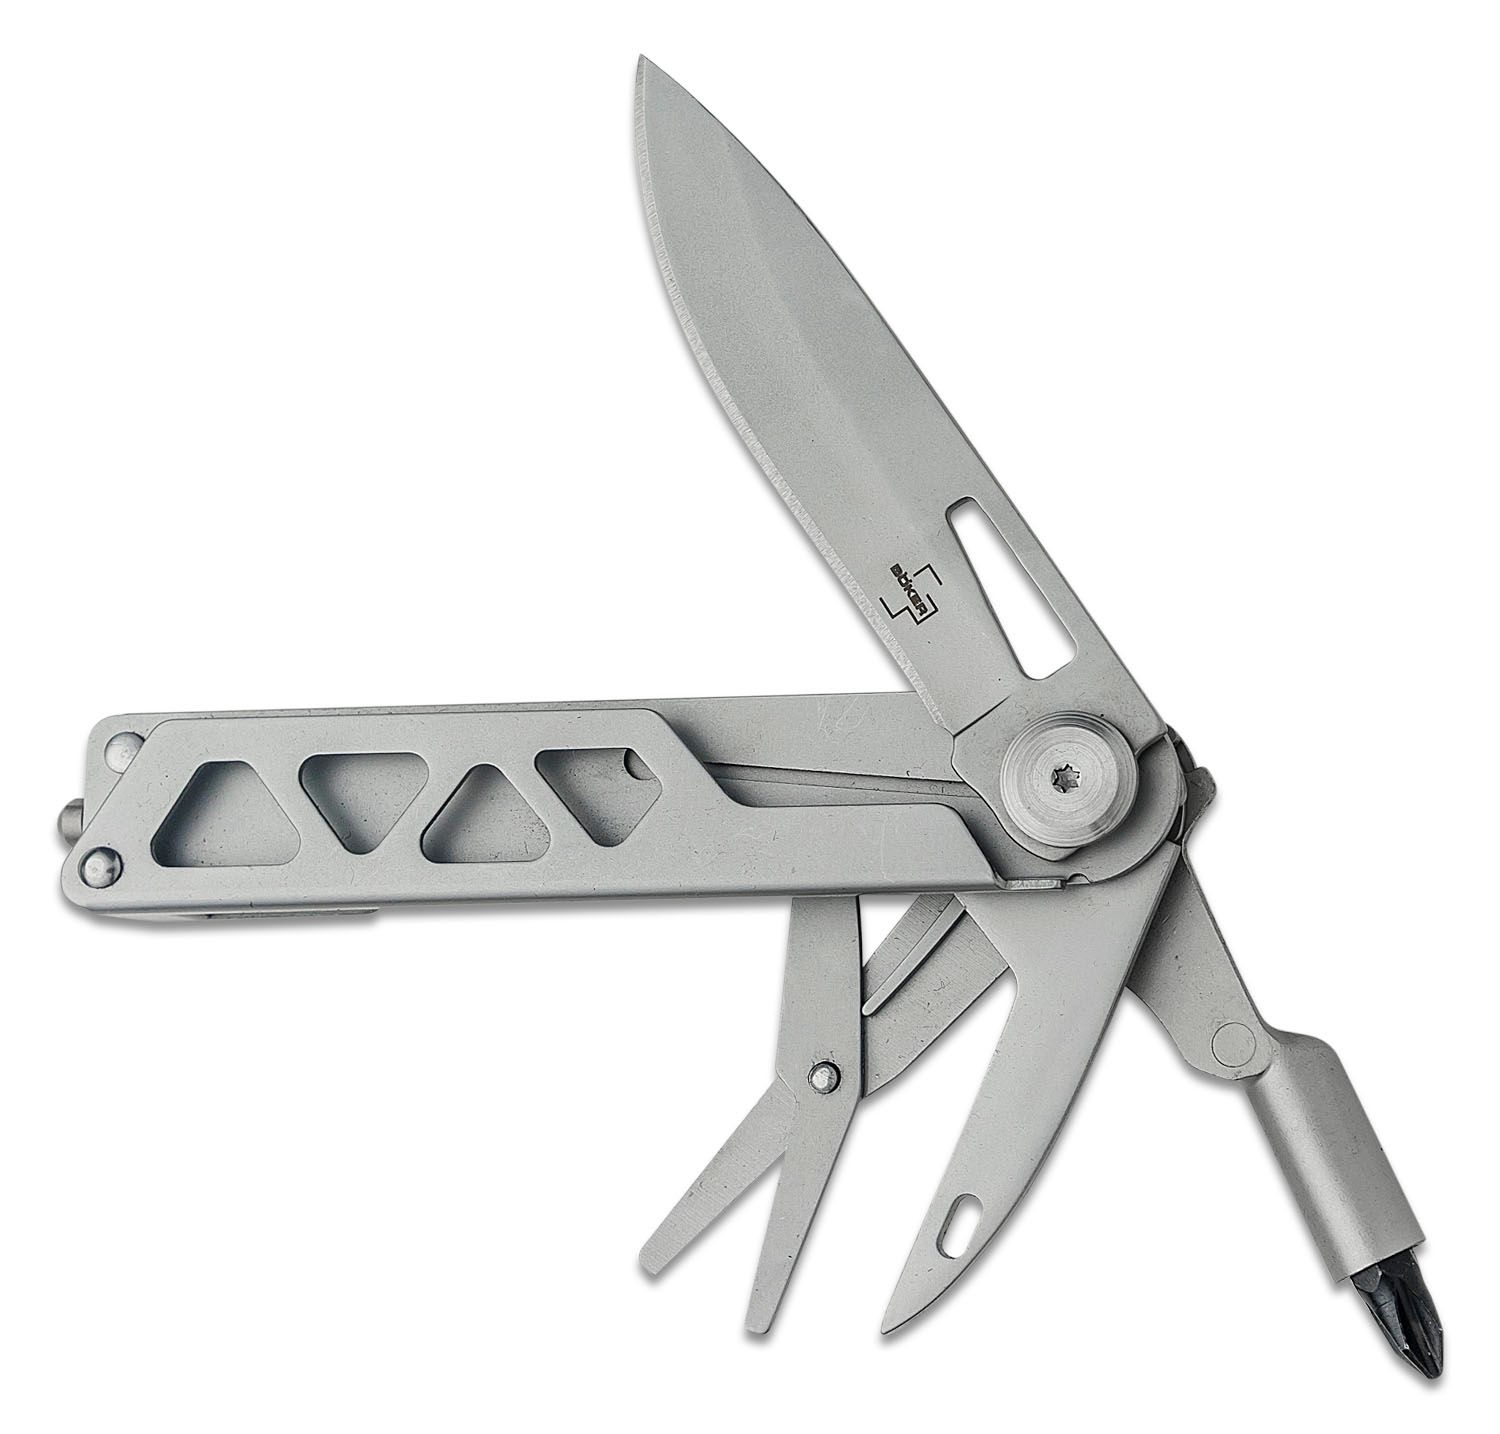 Nextool EDC Multi Functional Folding Pocket Knife with Strong